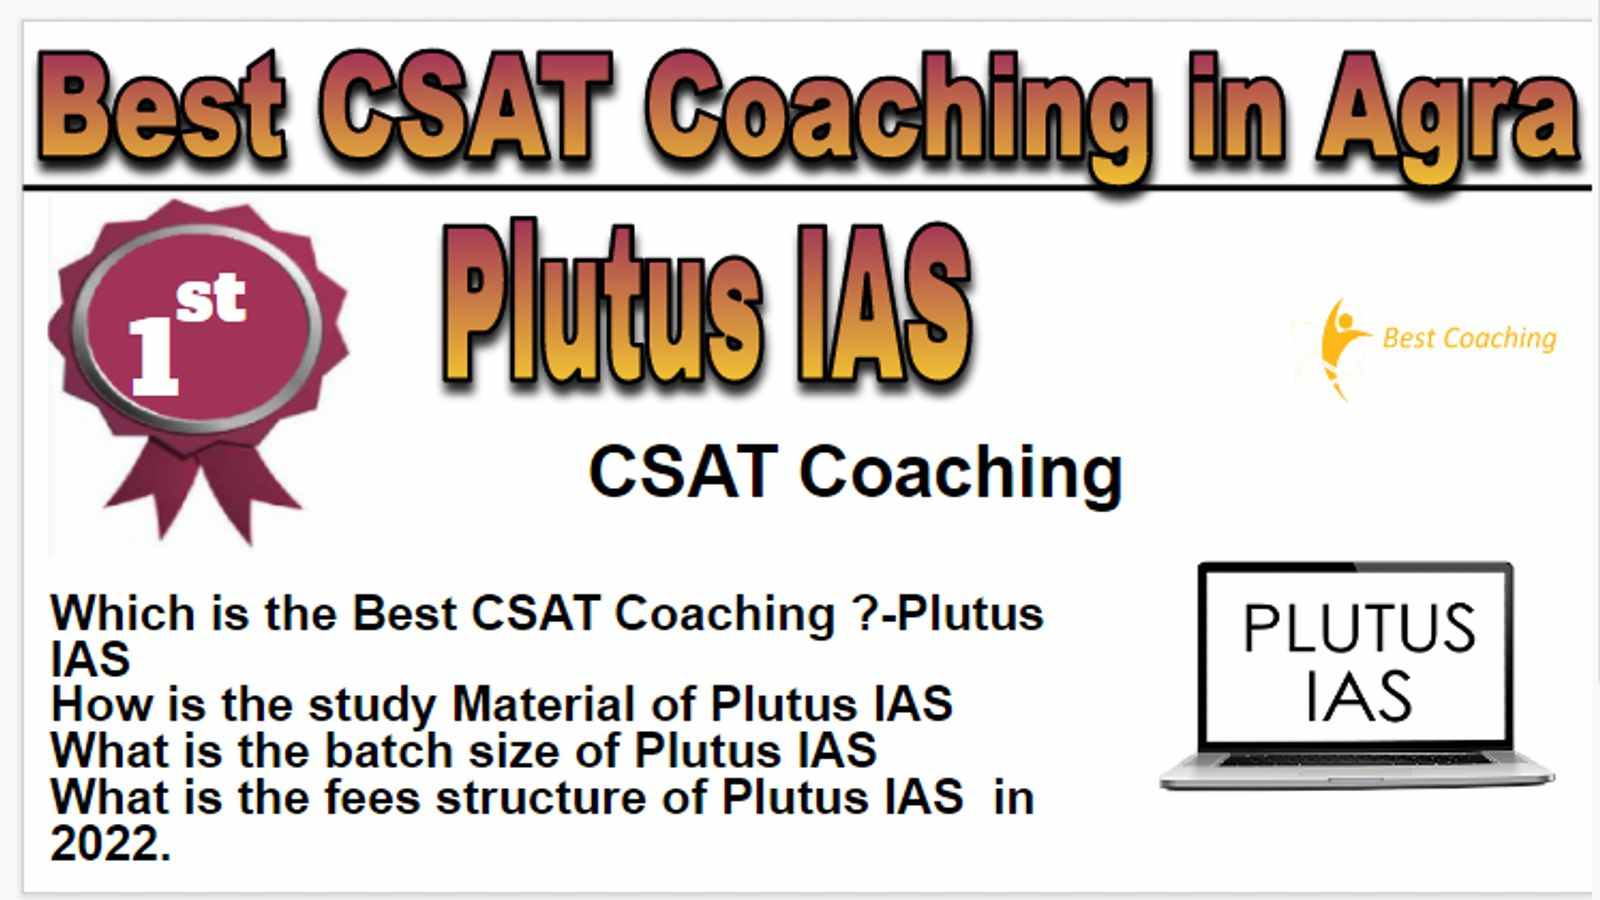 Rank 1 Best CSAT Coaching in Agra